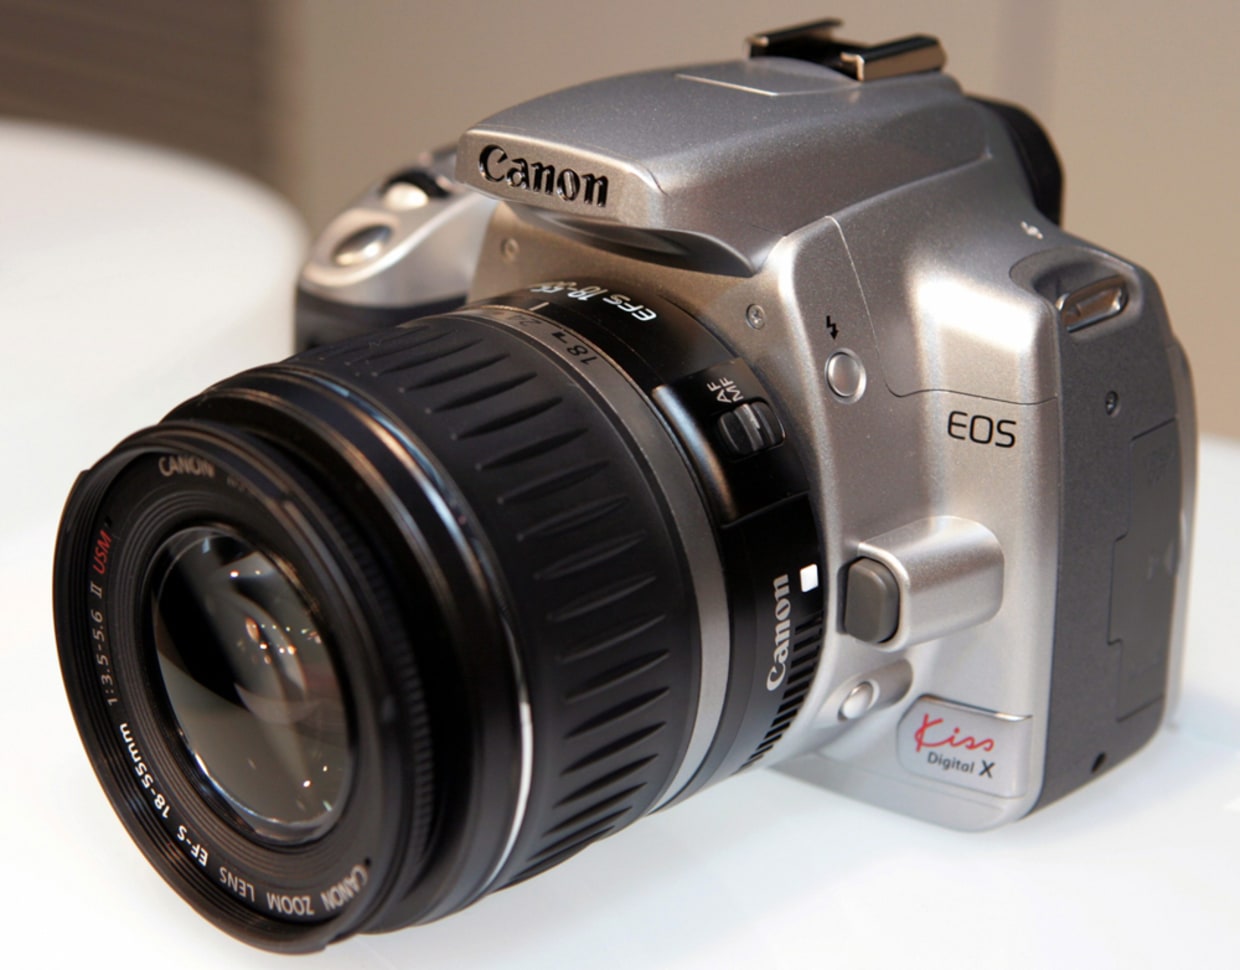 Canon launching entry-level digital SLR